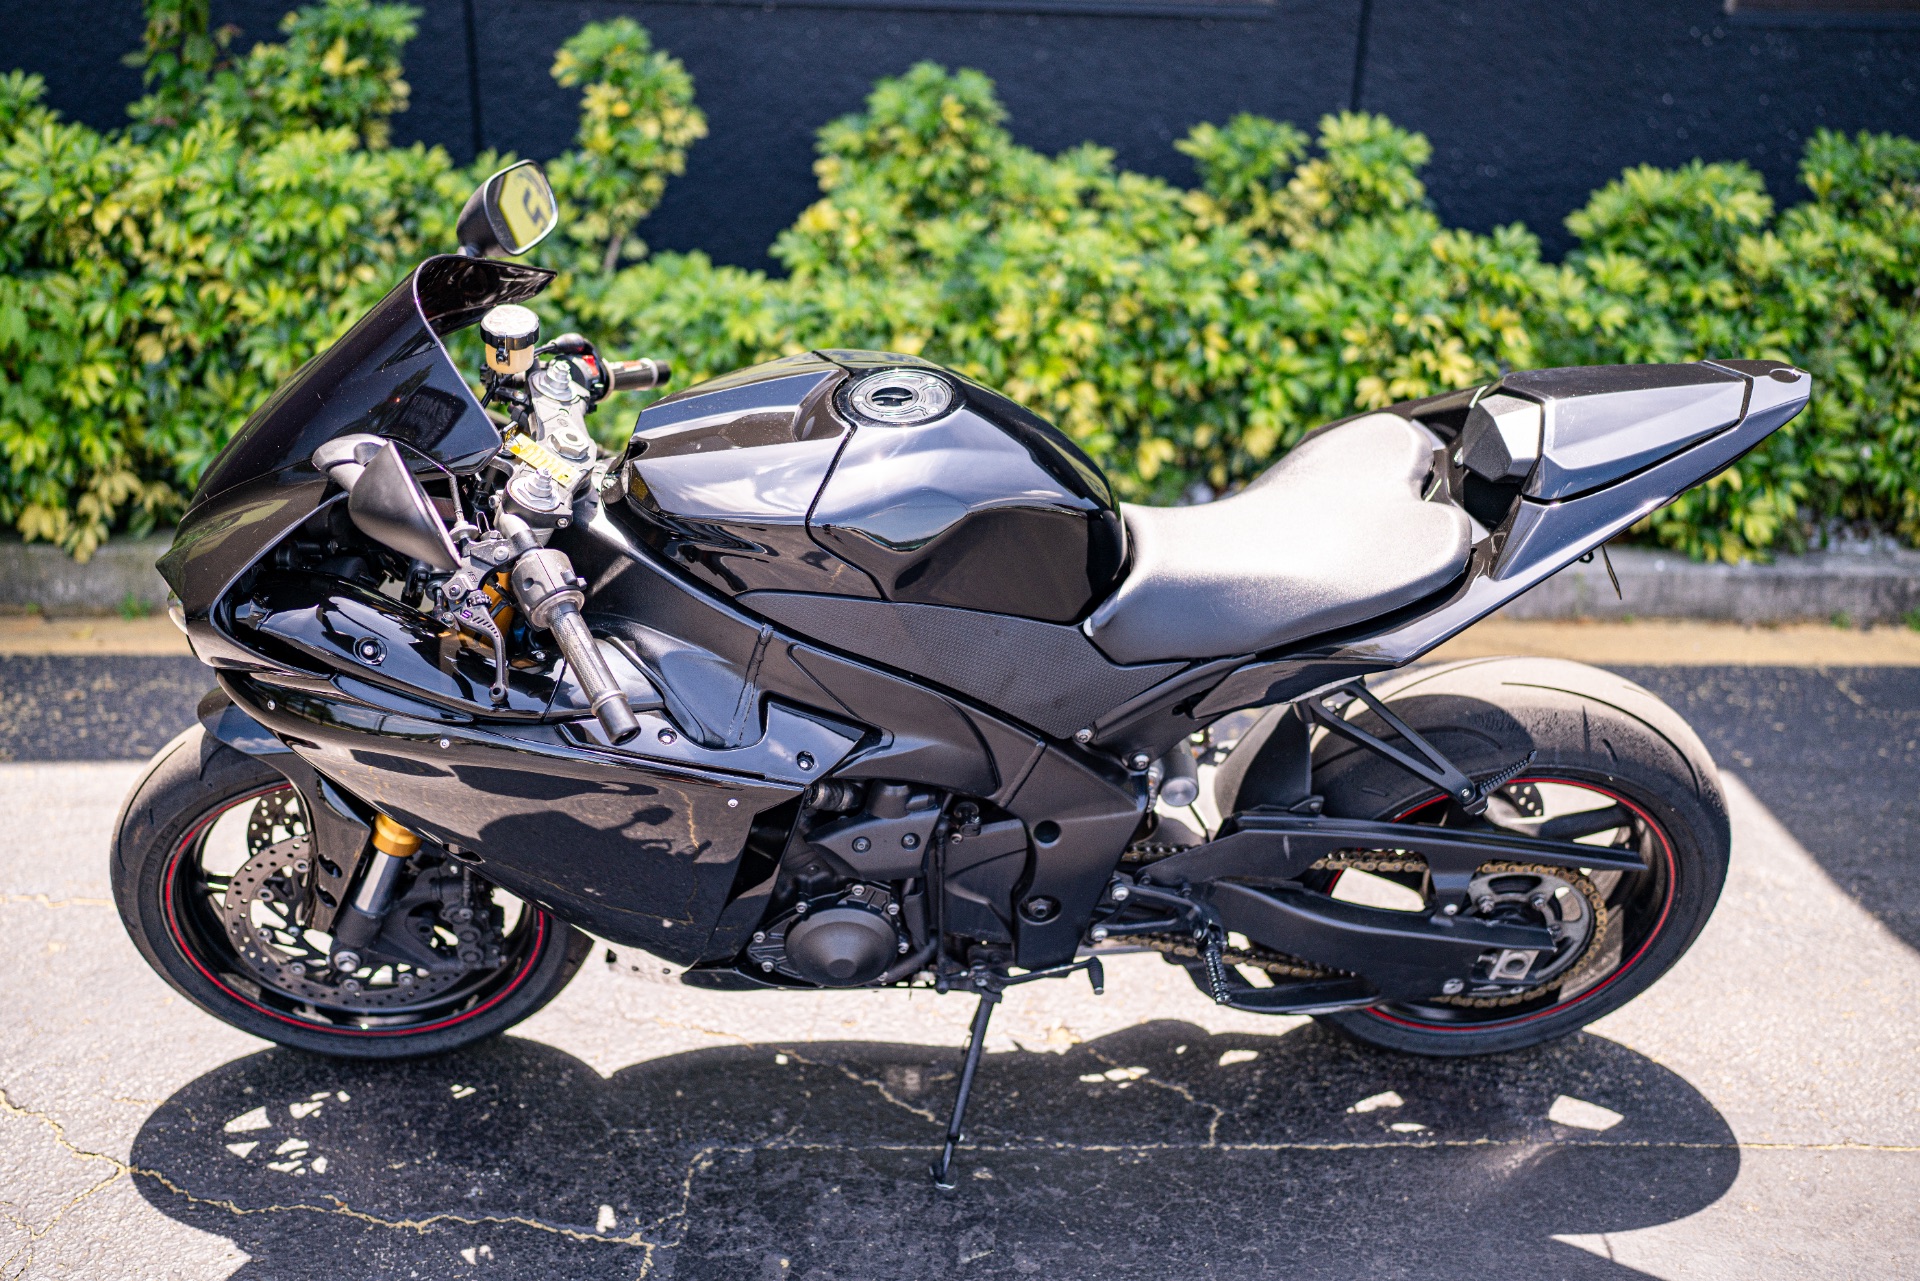 2014 Yamaha YZF-R1 in Jacksonville, Florida - Photo 13